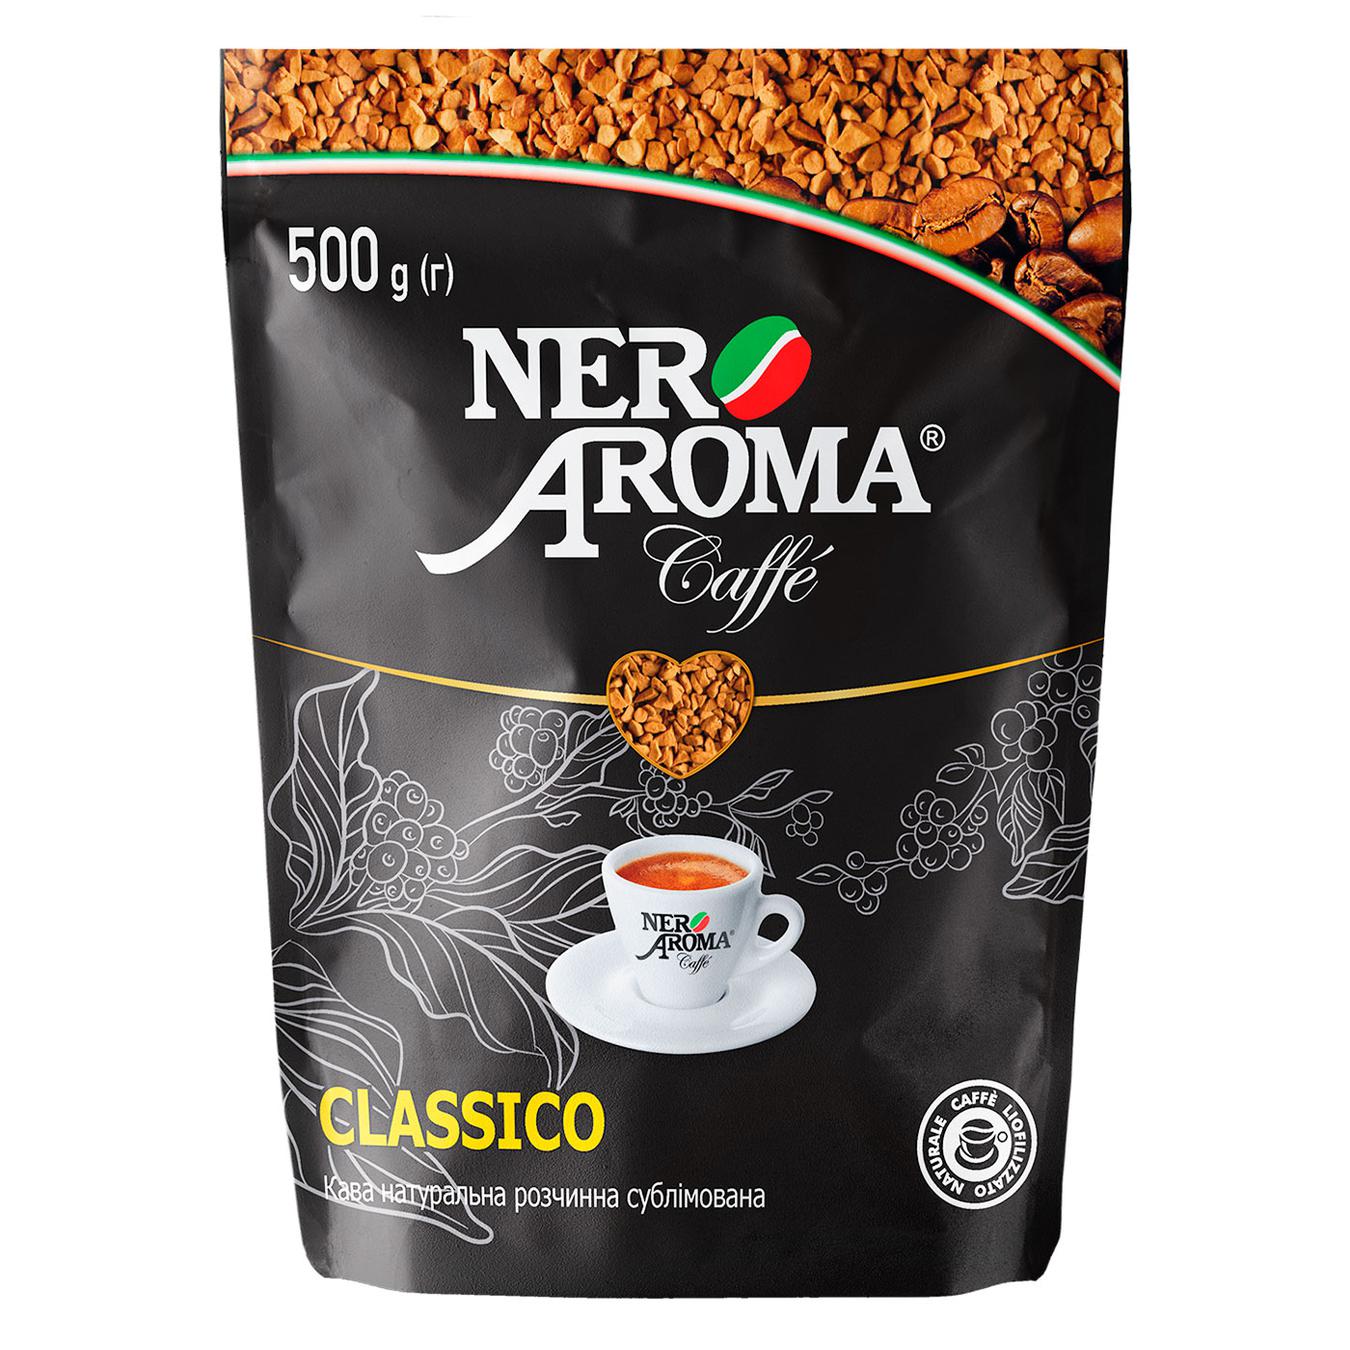 Nero Aroma Classico natural soluble sublimated coffee 500g